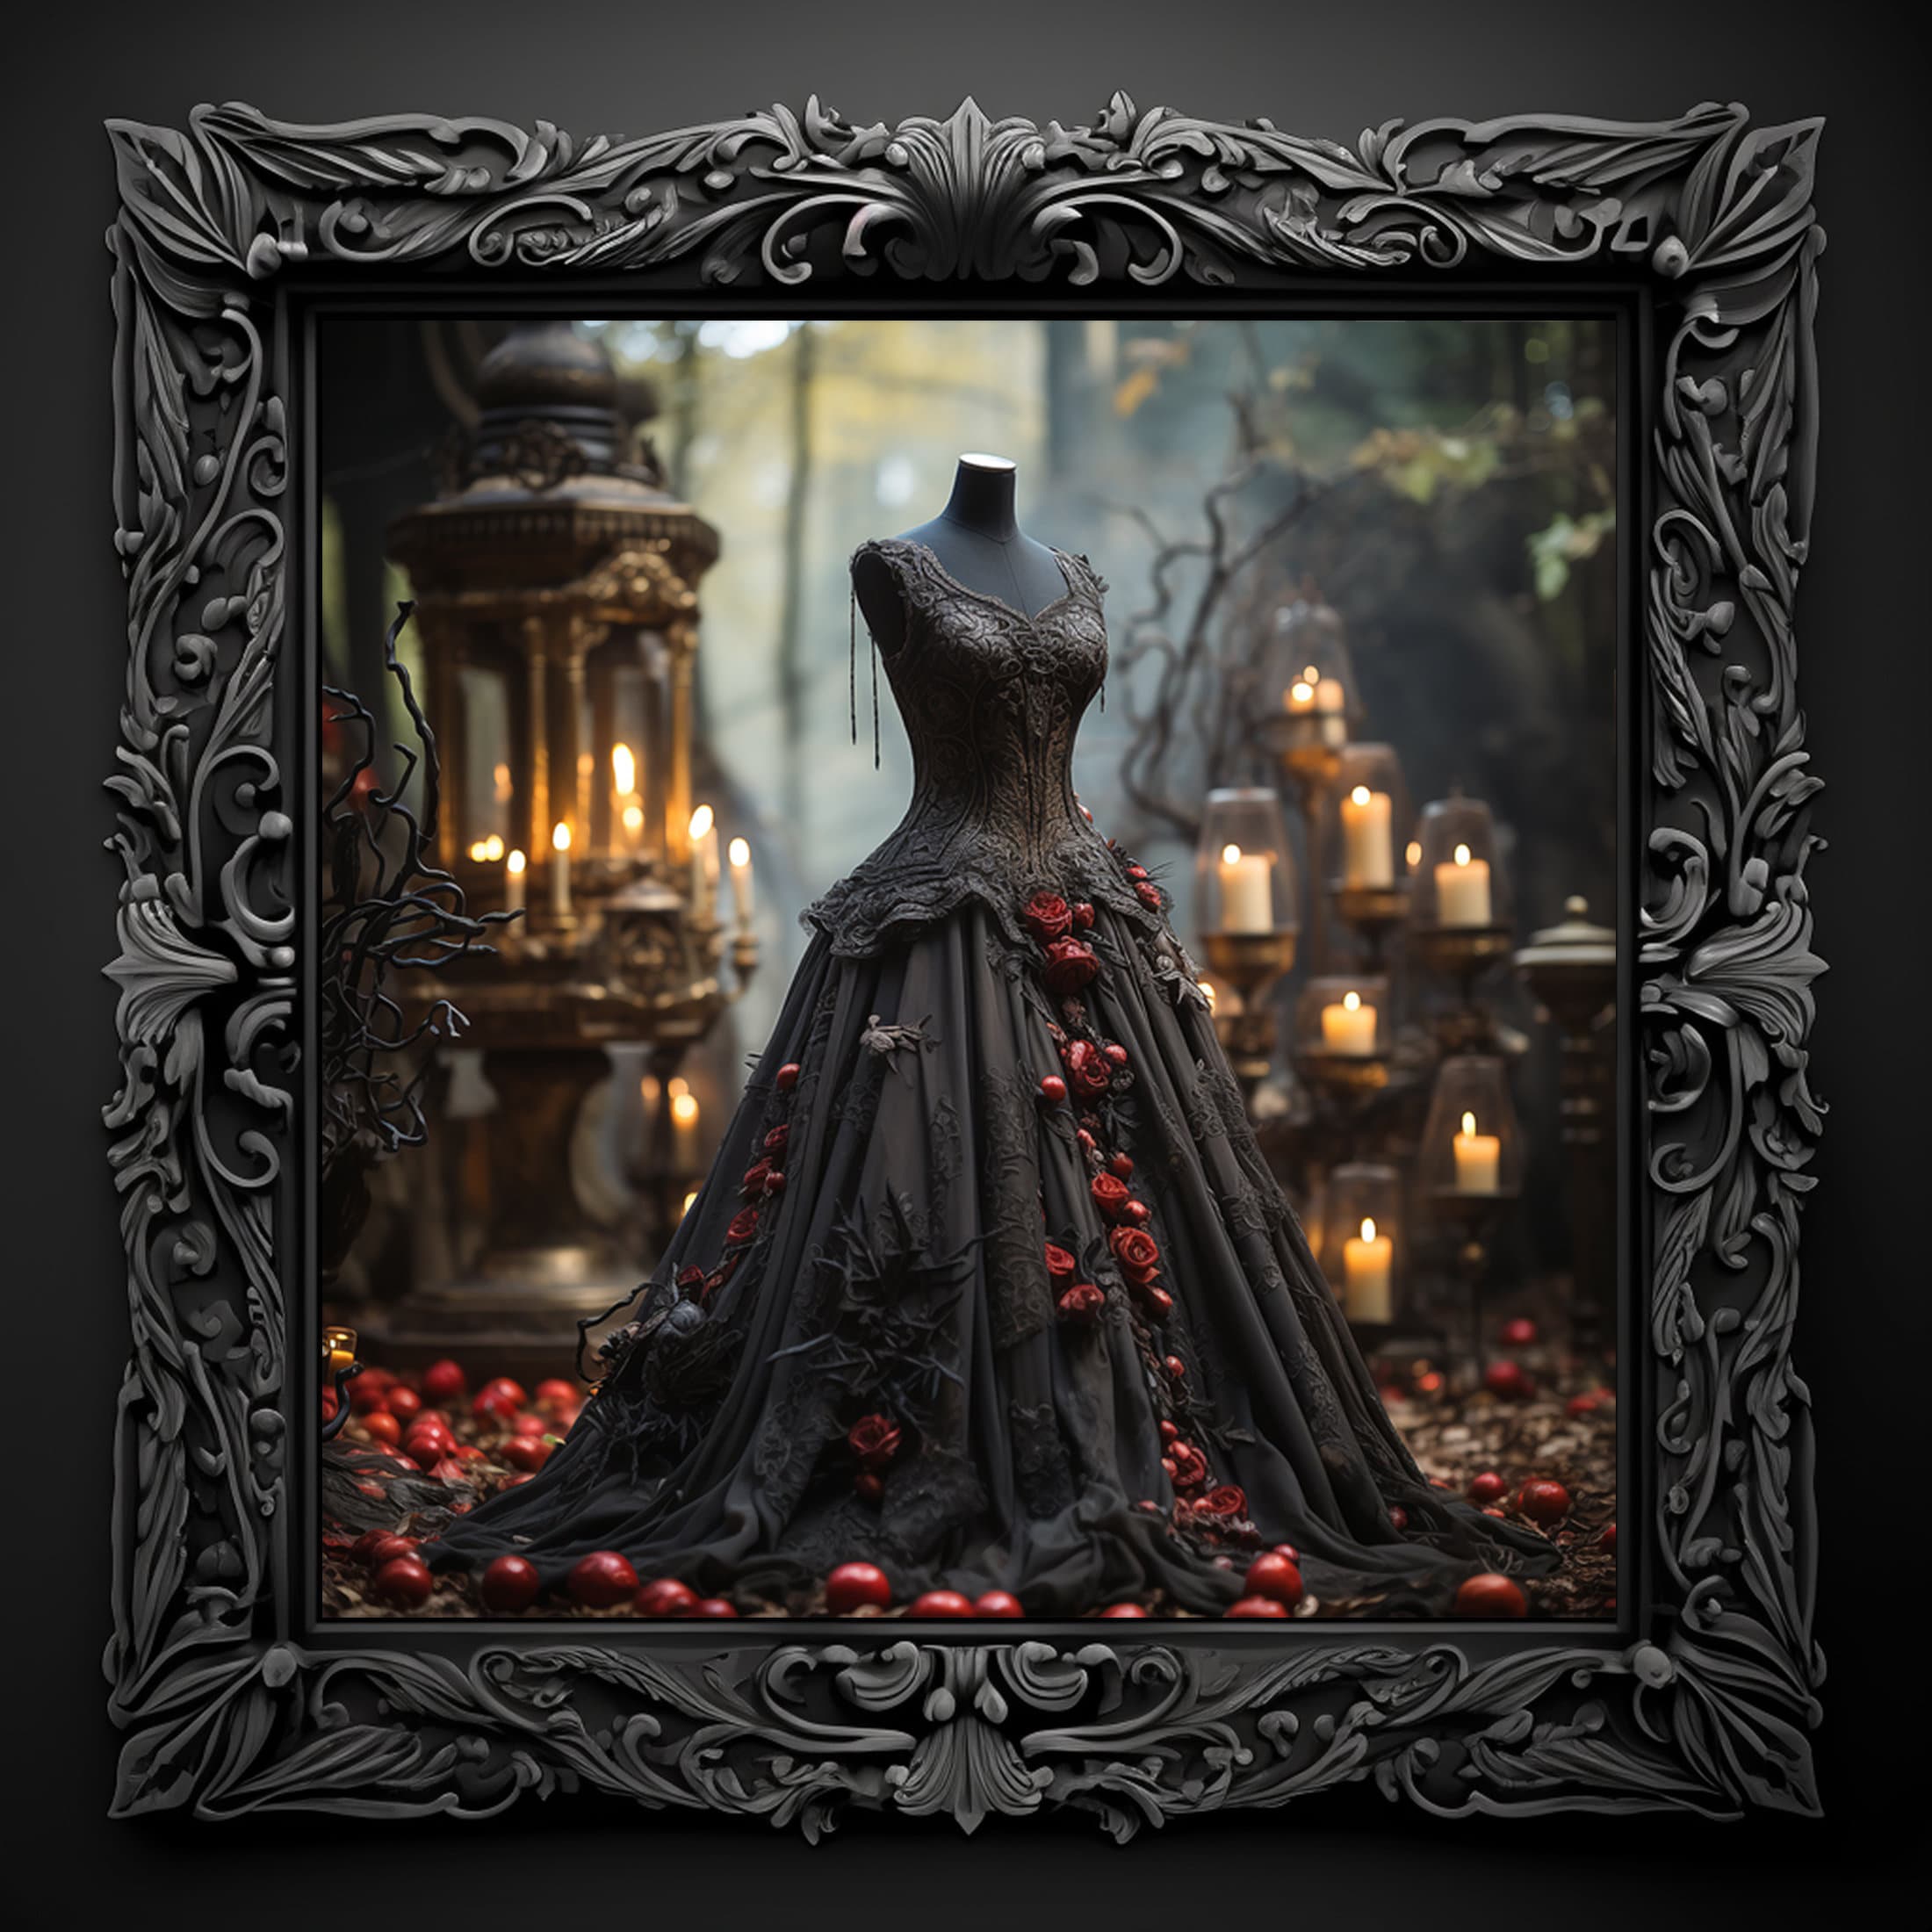 Gothic Victorian Dresses